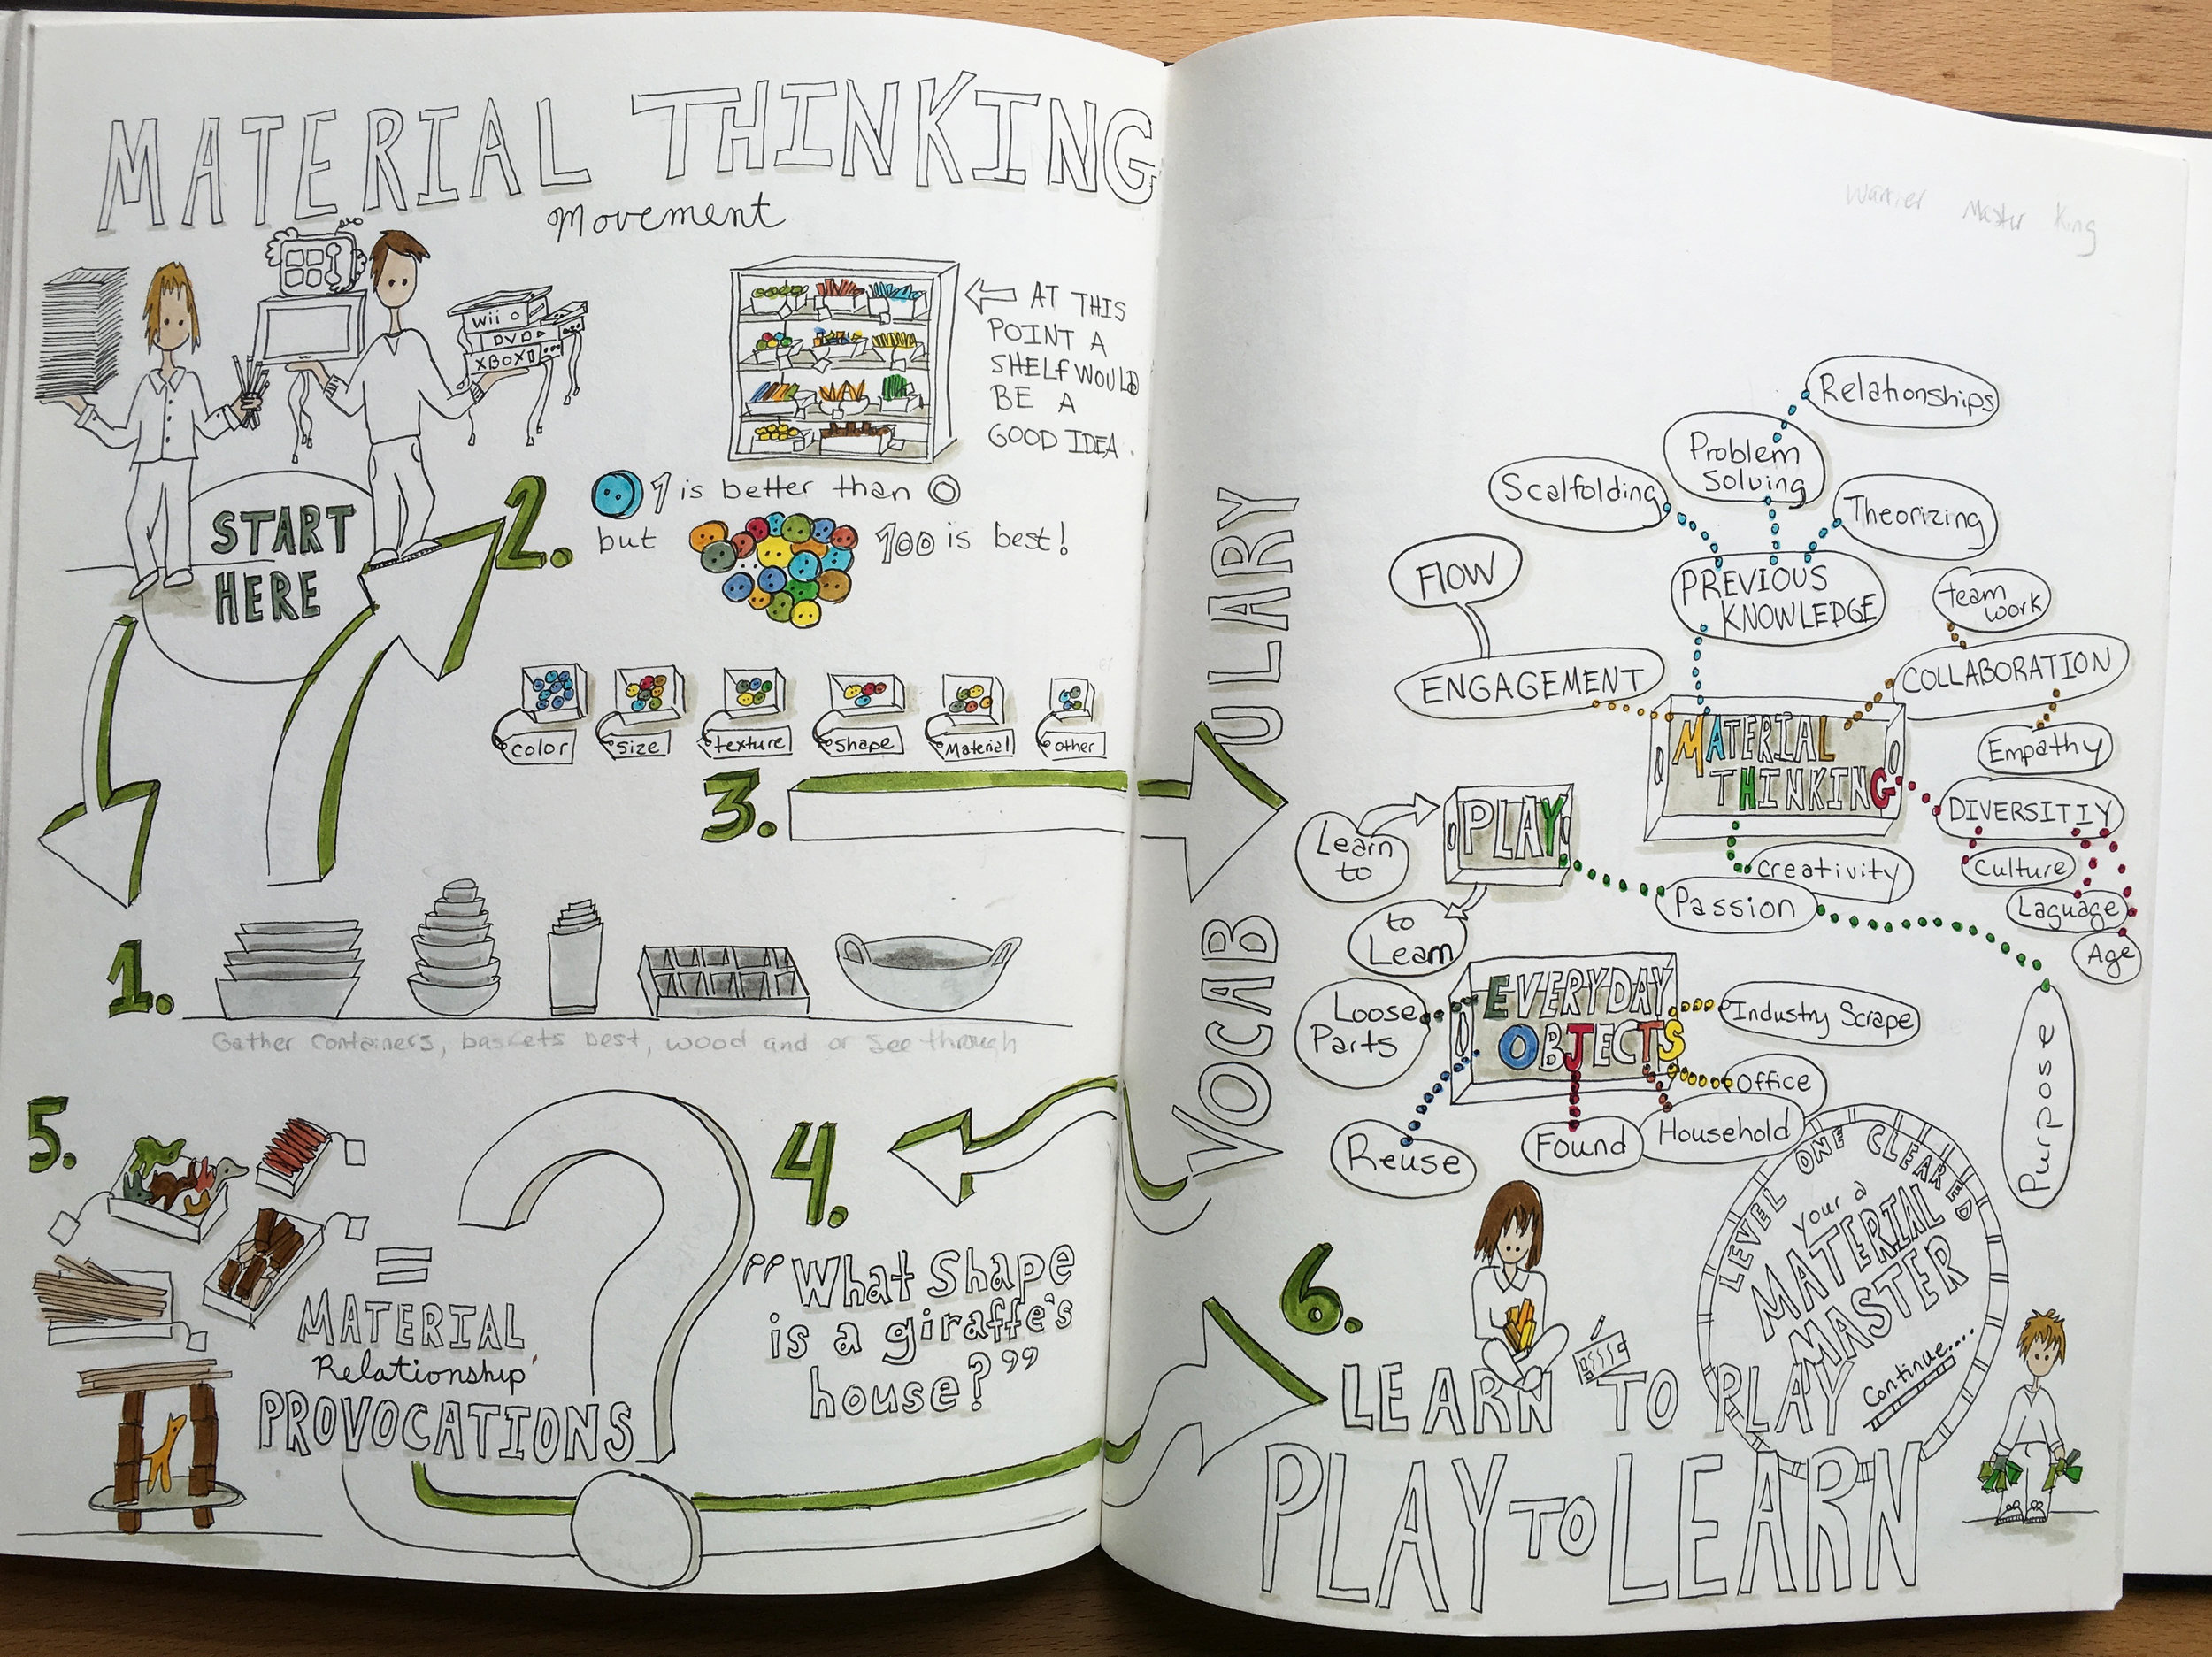 Illustrating information and thinking